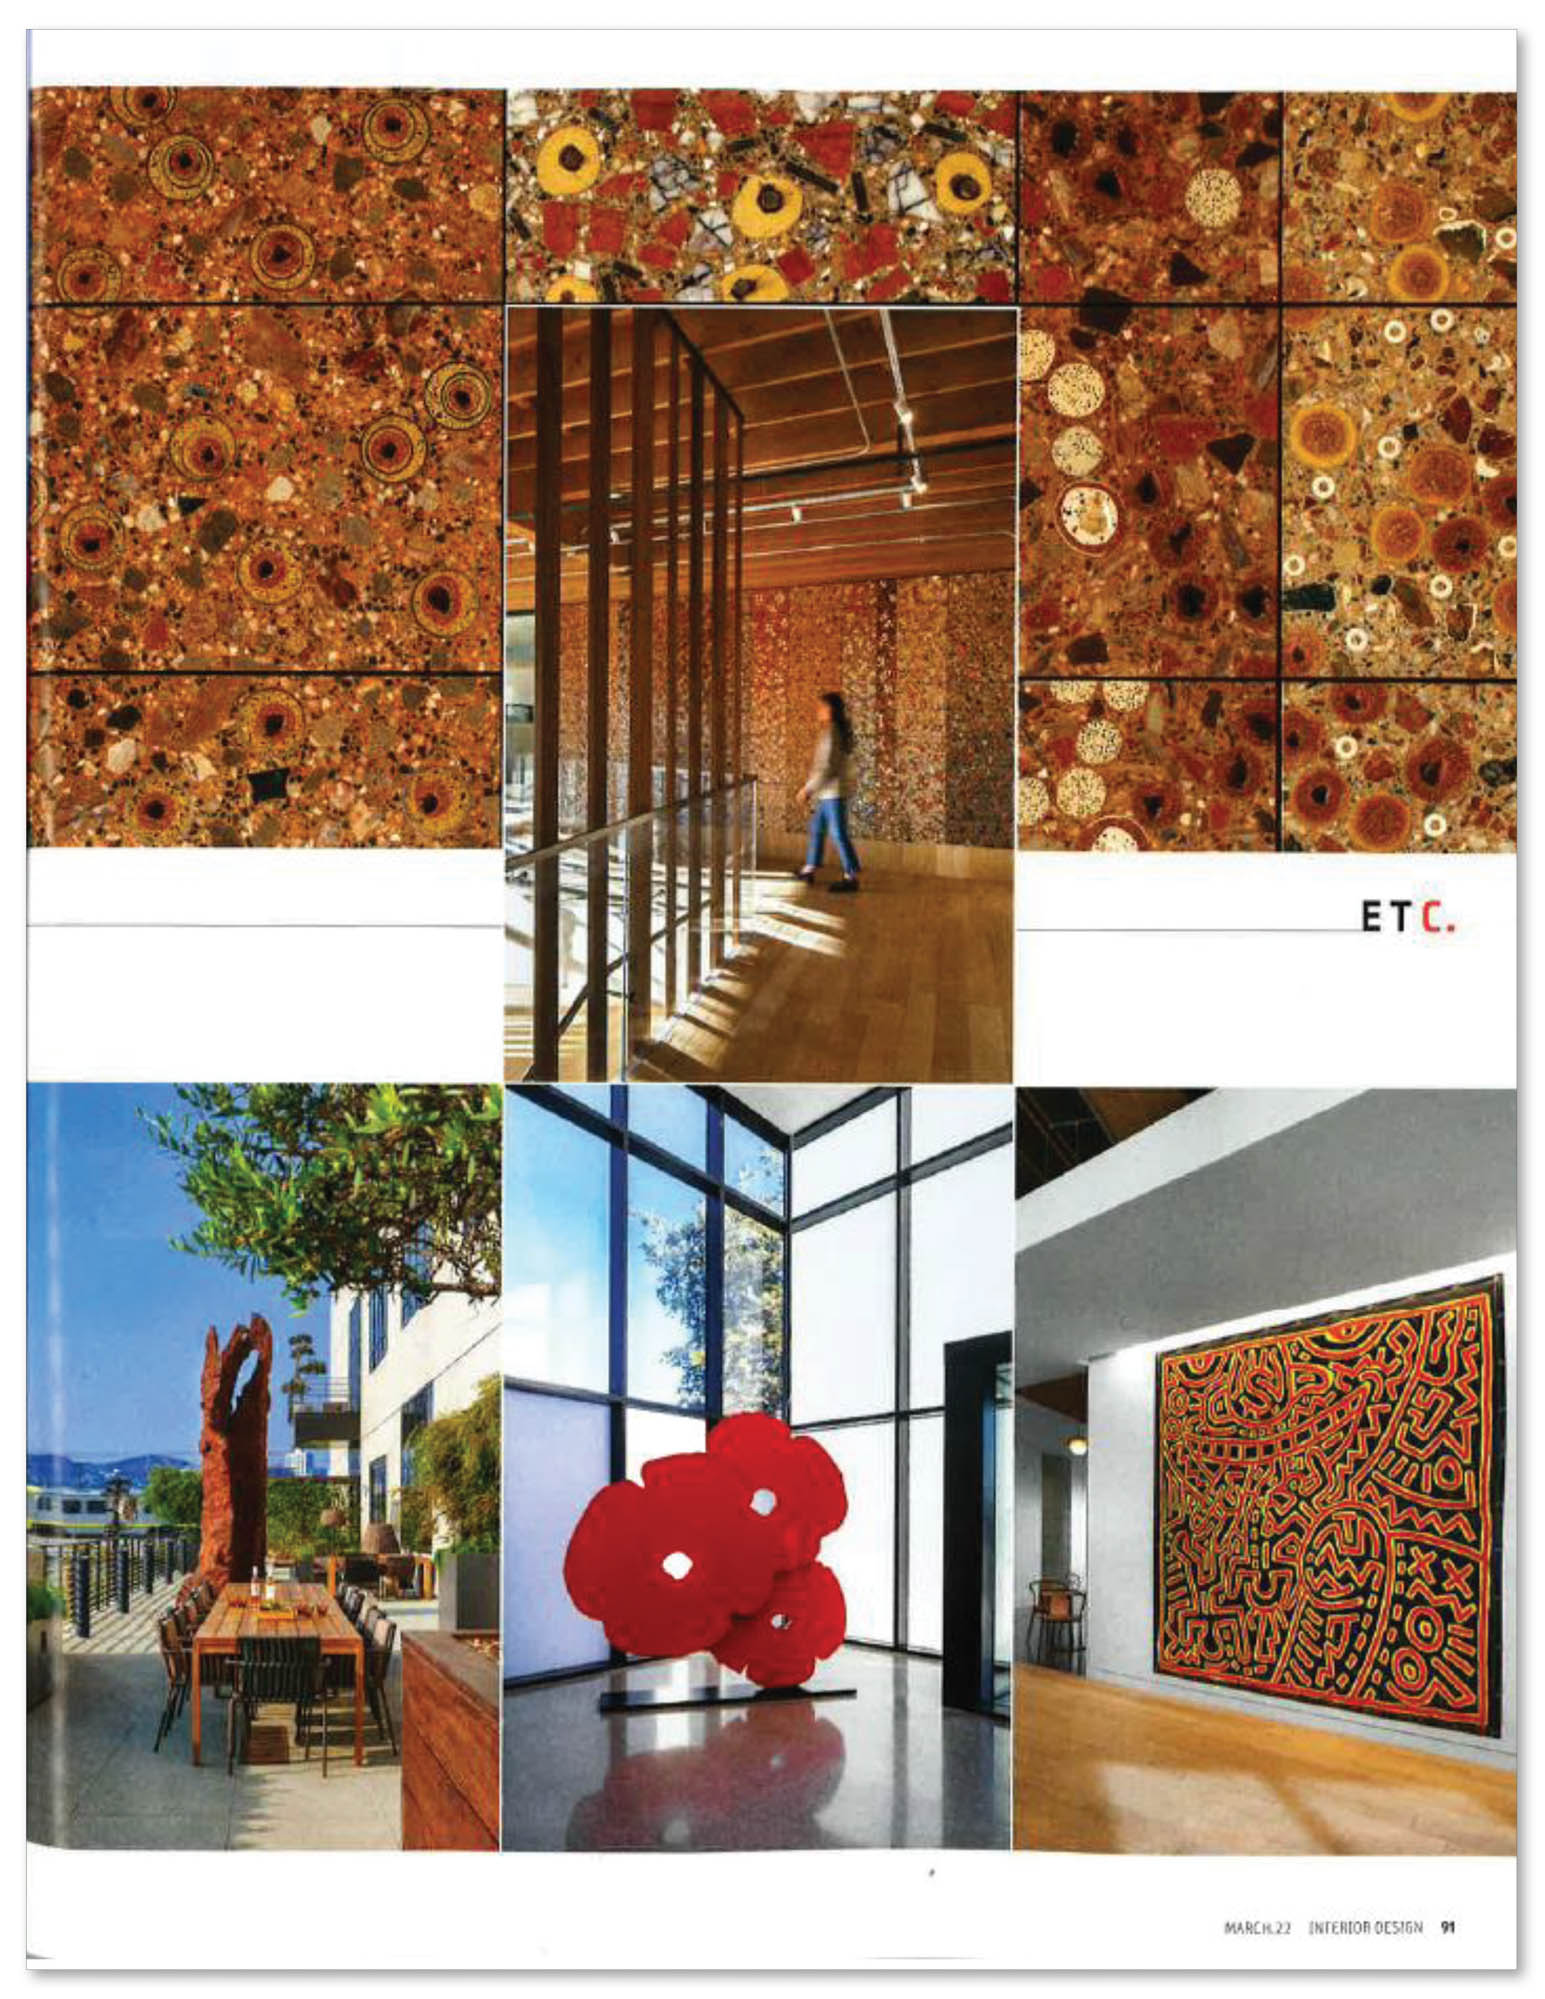 Interior Design Mag spread